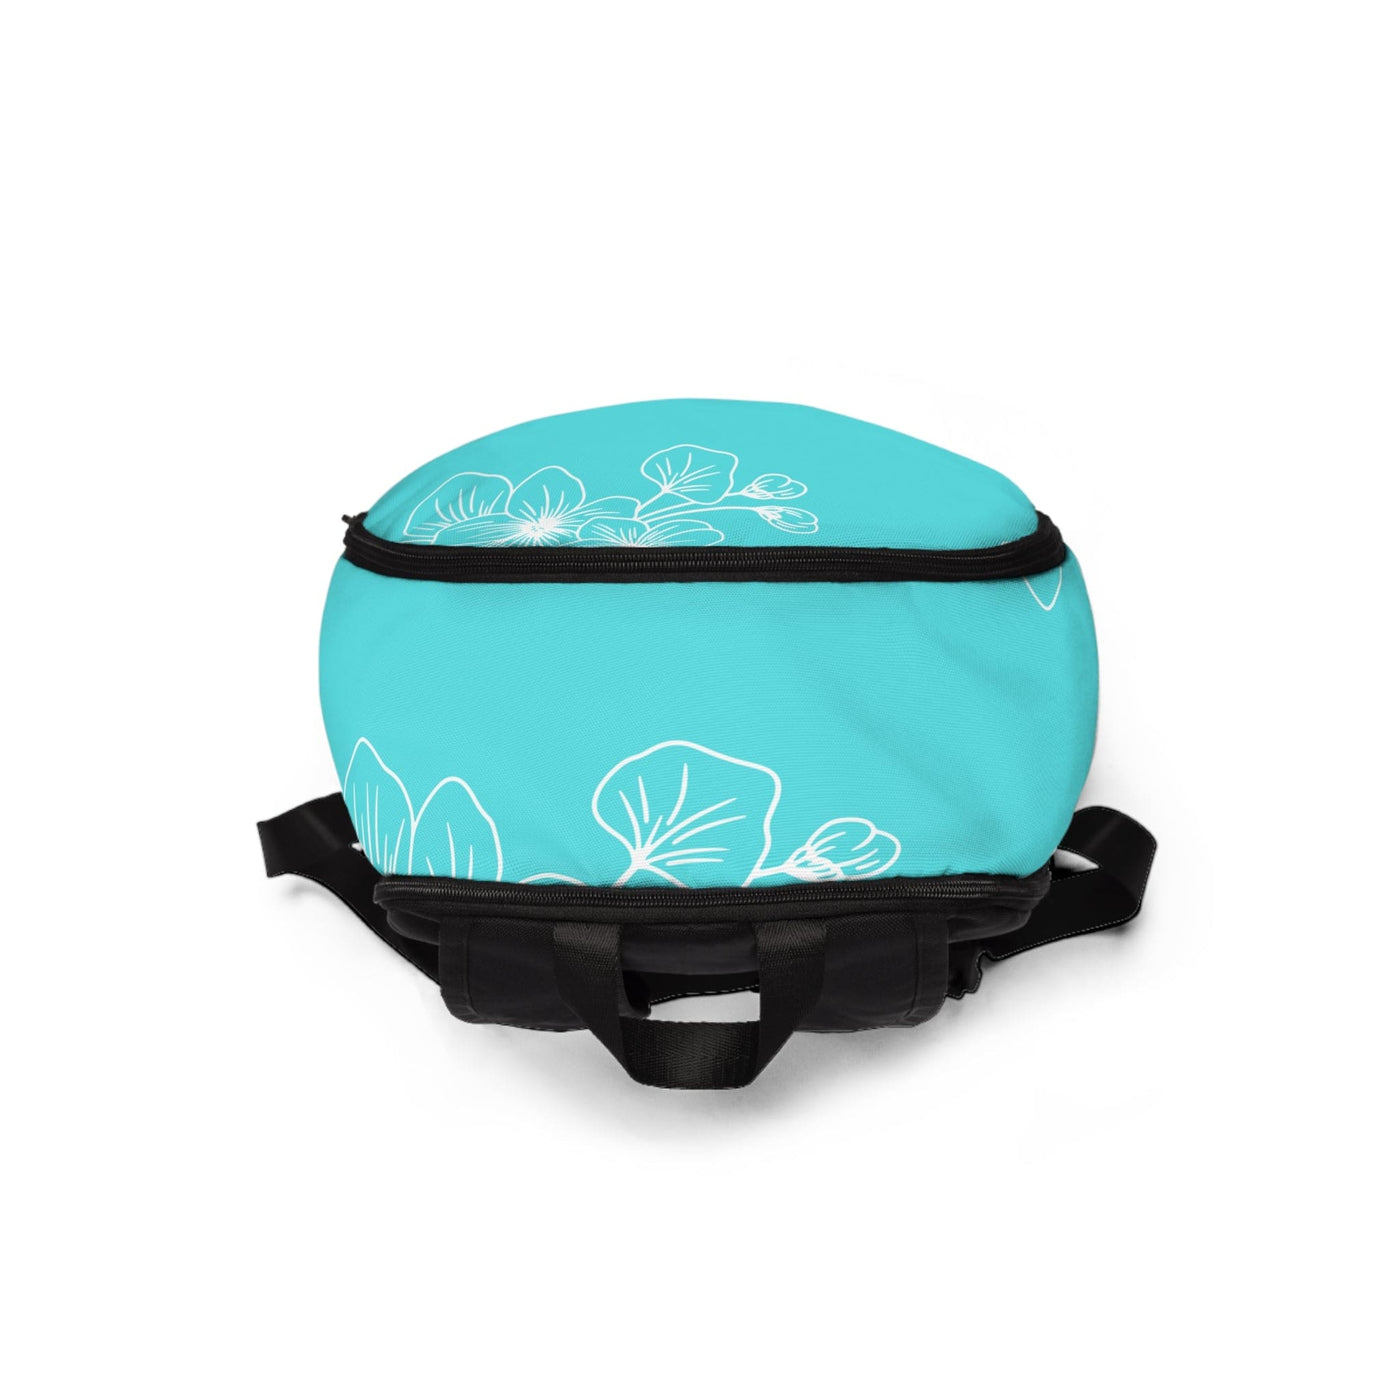 Fashion Backpack Waterproof Floral Cyan Blue 7022523 - Bags